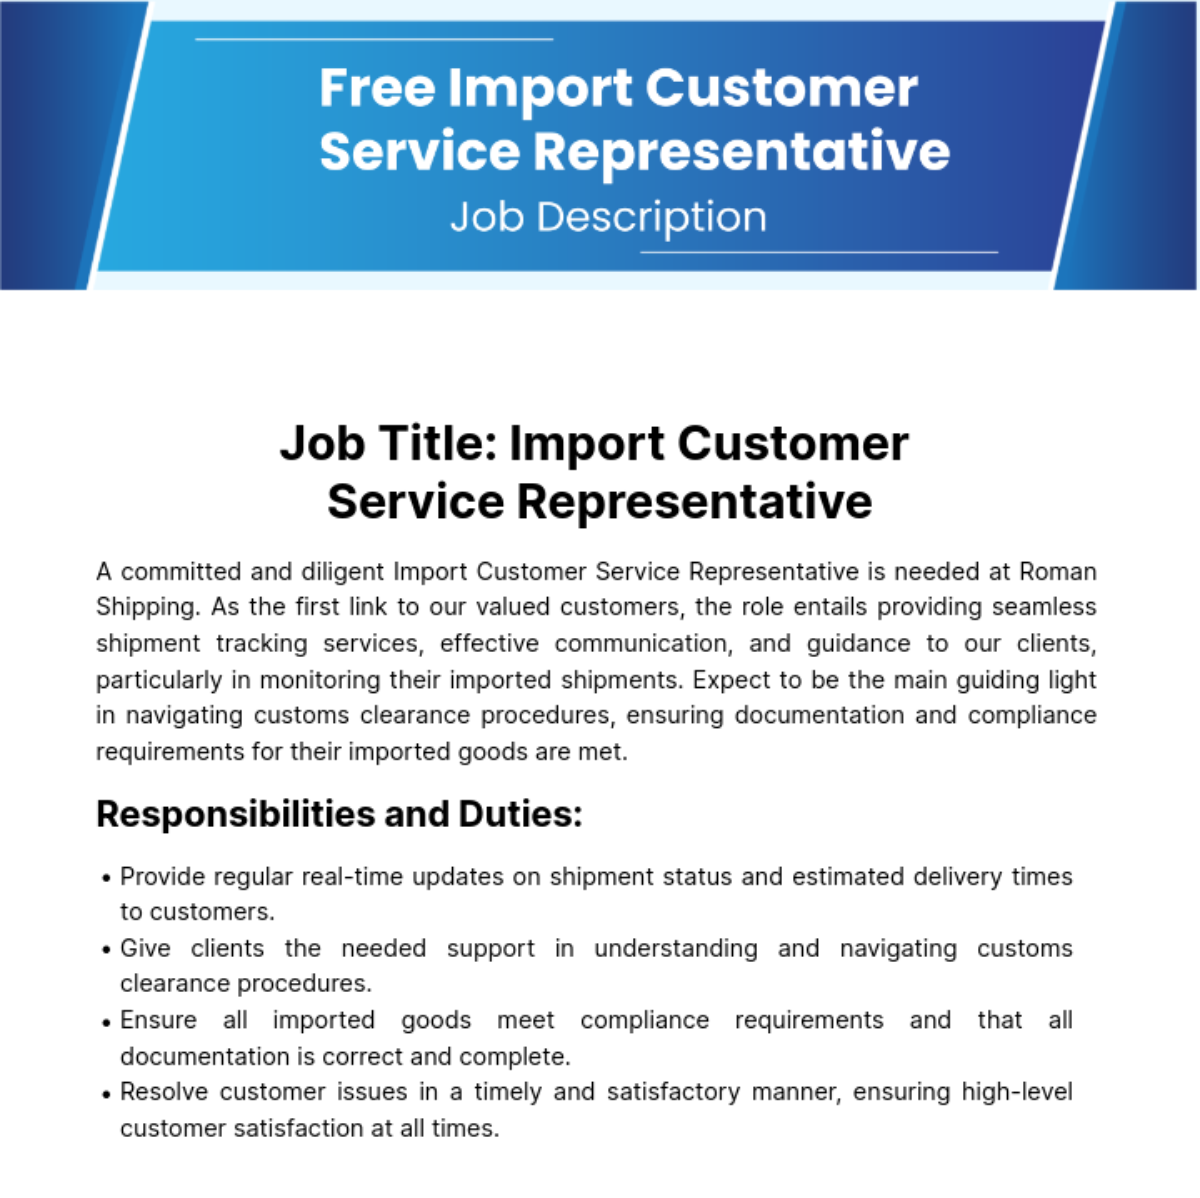 Free Import Customer Service Job Description Template